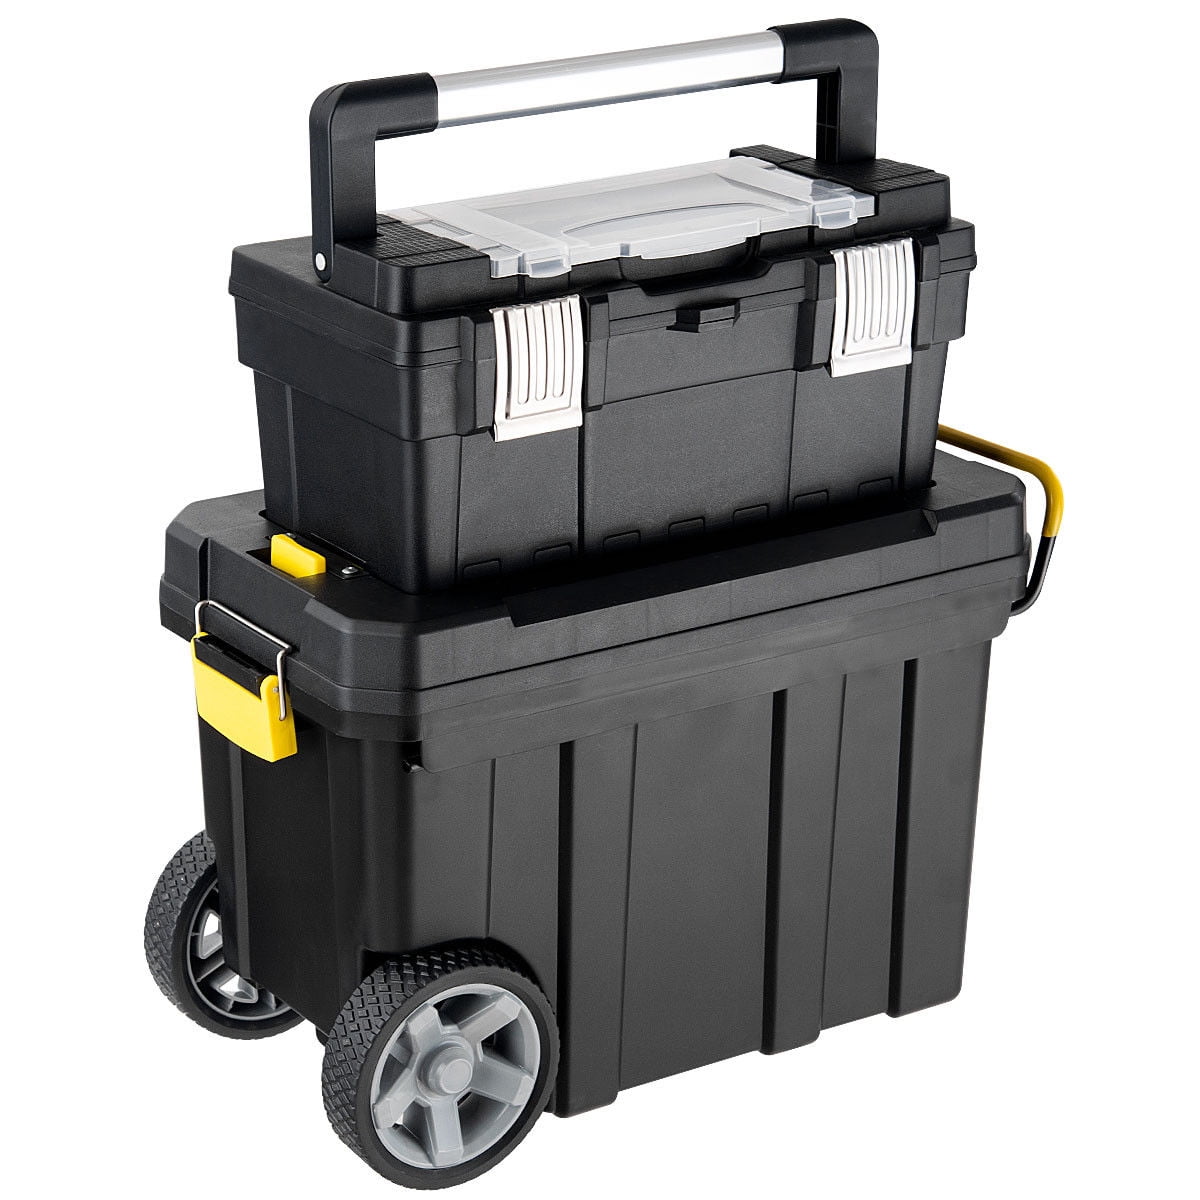 NEW Stanley 3-in-1 Rolling Tool Box Organizer Portable Workshop Cart Storage Bin 